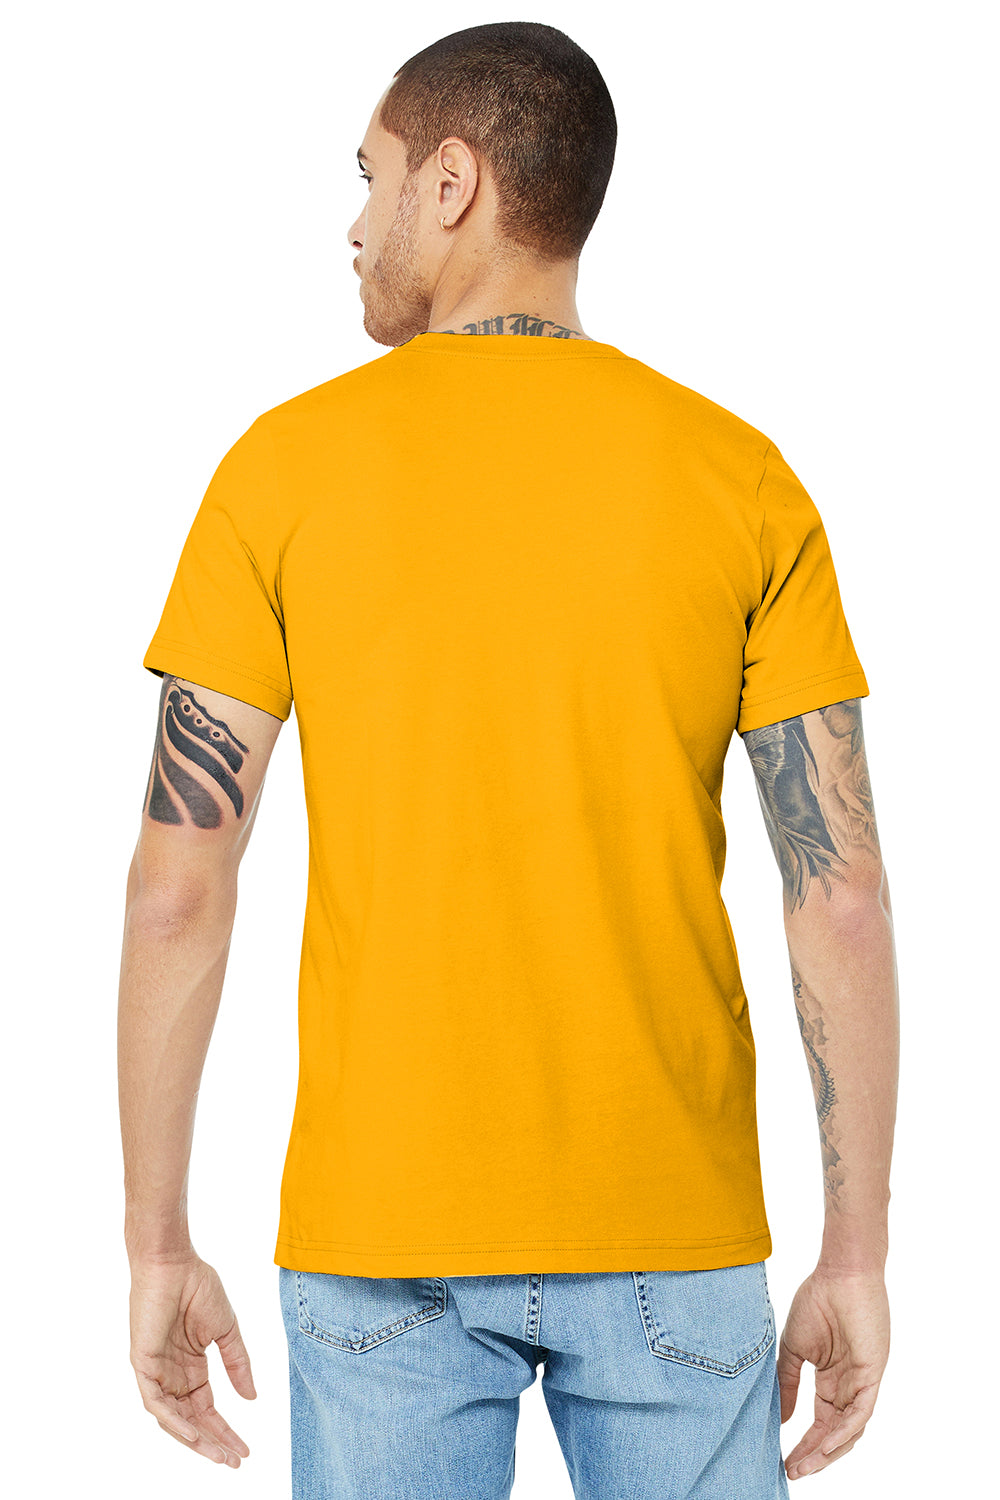 Bella + Canvas BC3001/3001C Mens Jersey Short Sleeve Crewneck T-Shirt Gold Model Back